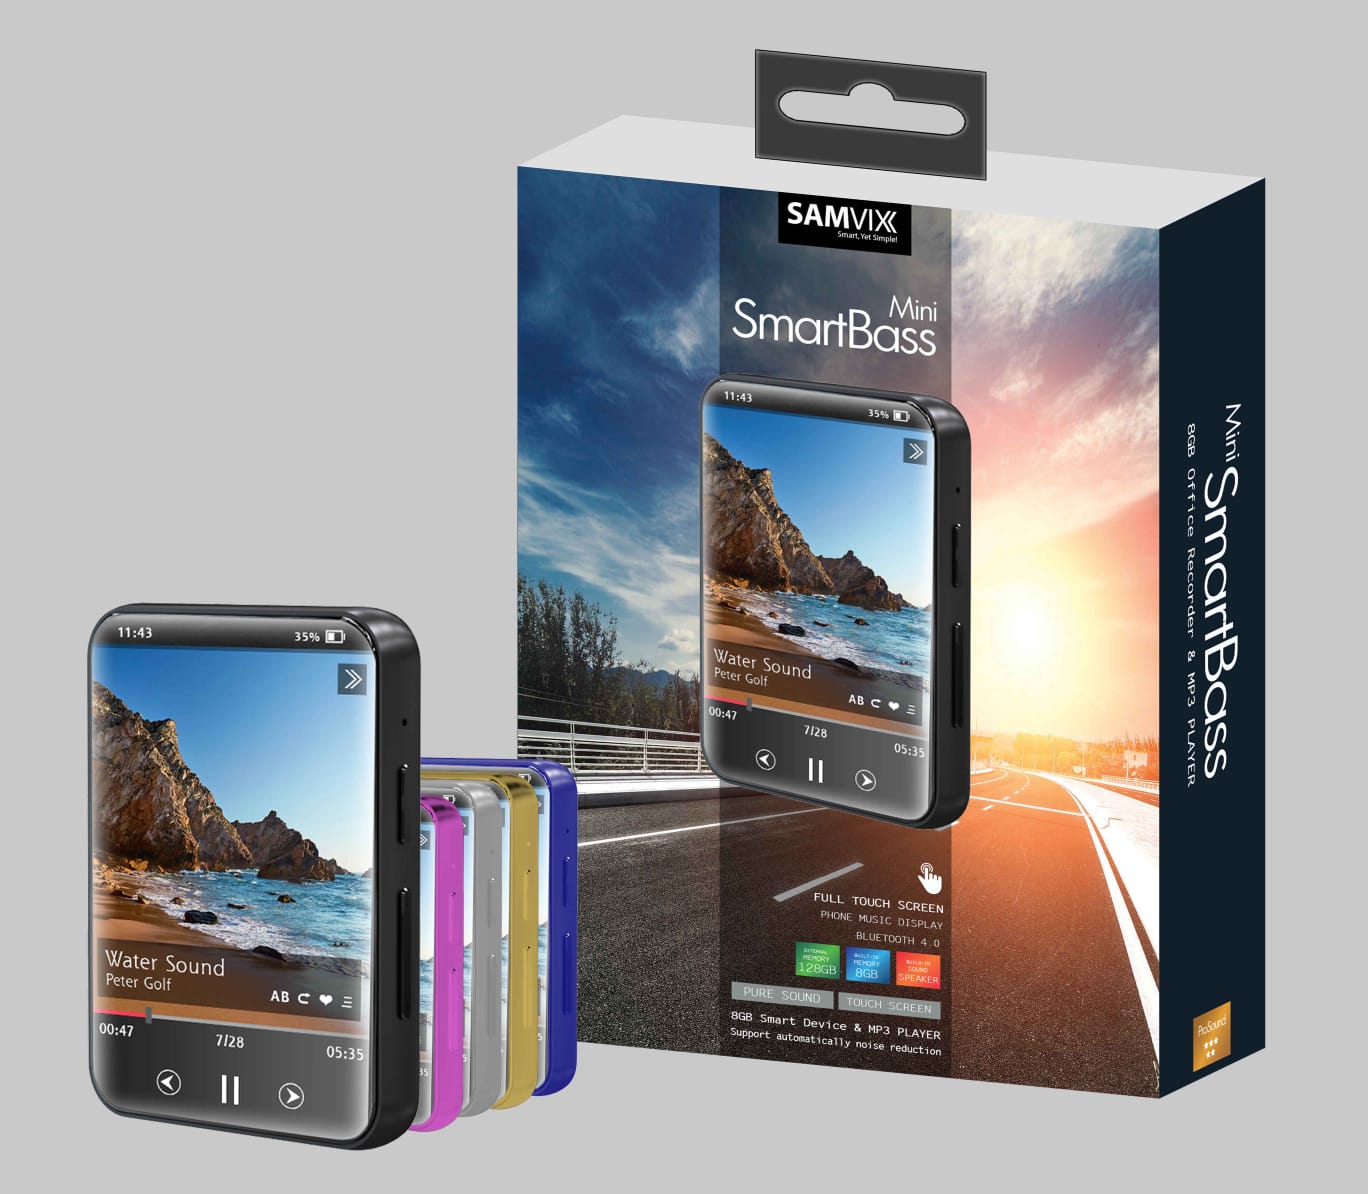 Samvix Mini SmartBass Touch Screen 8 GB MP3 Player (Black, Silver,Pink)